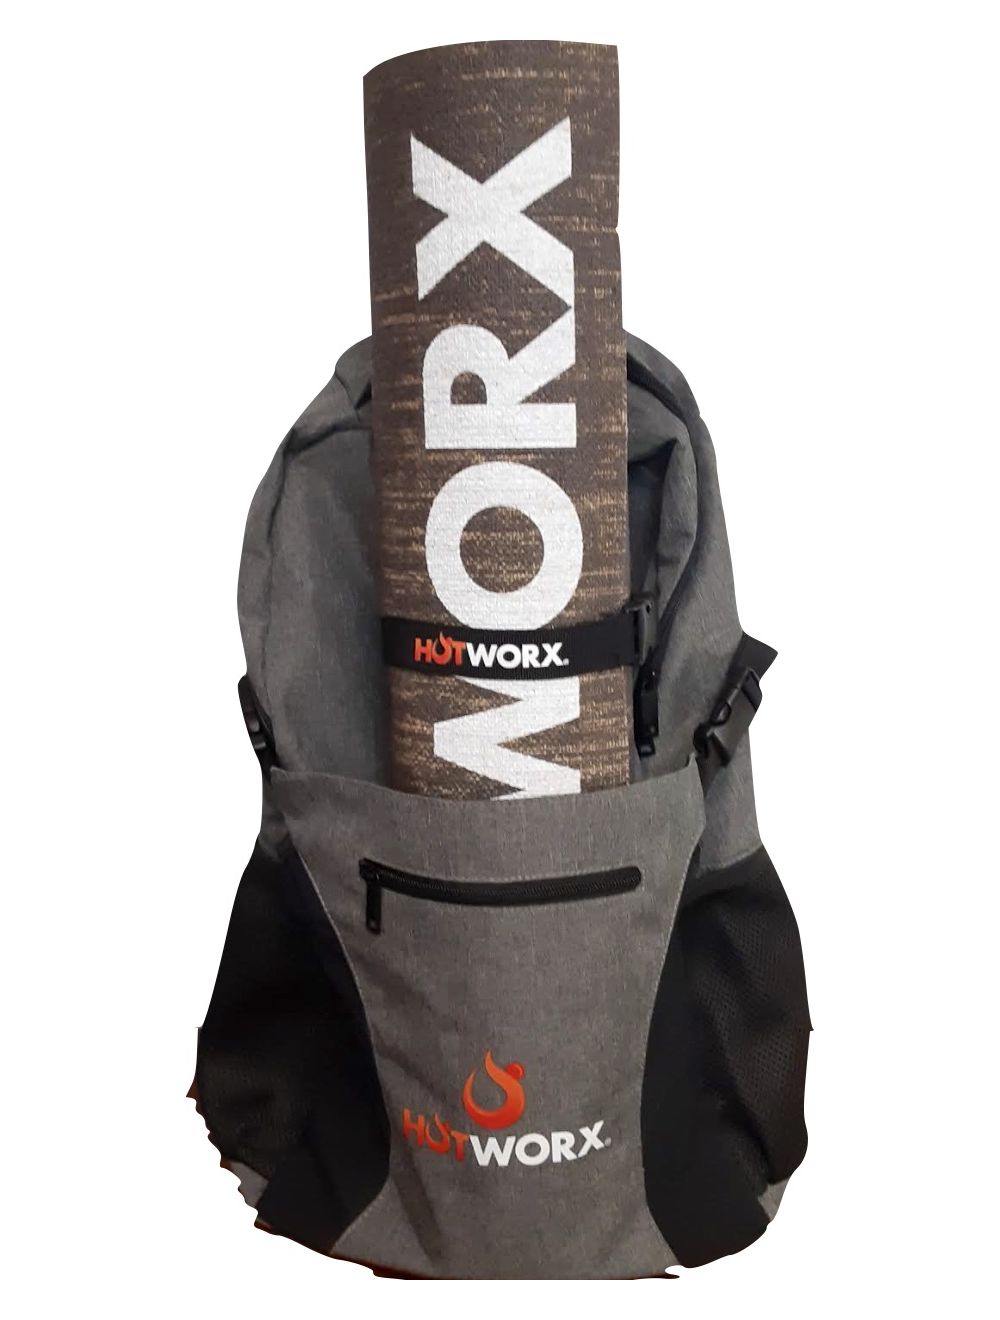 Hotworx yoga mat, towel, and bag